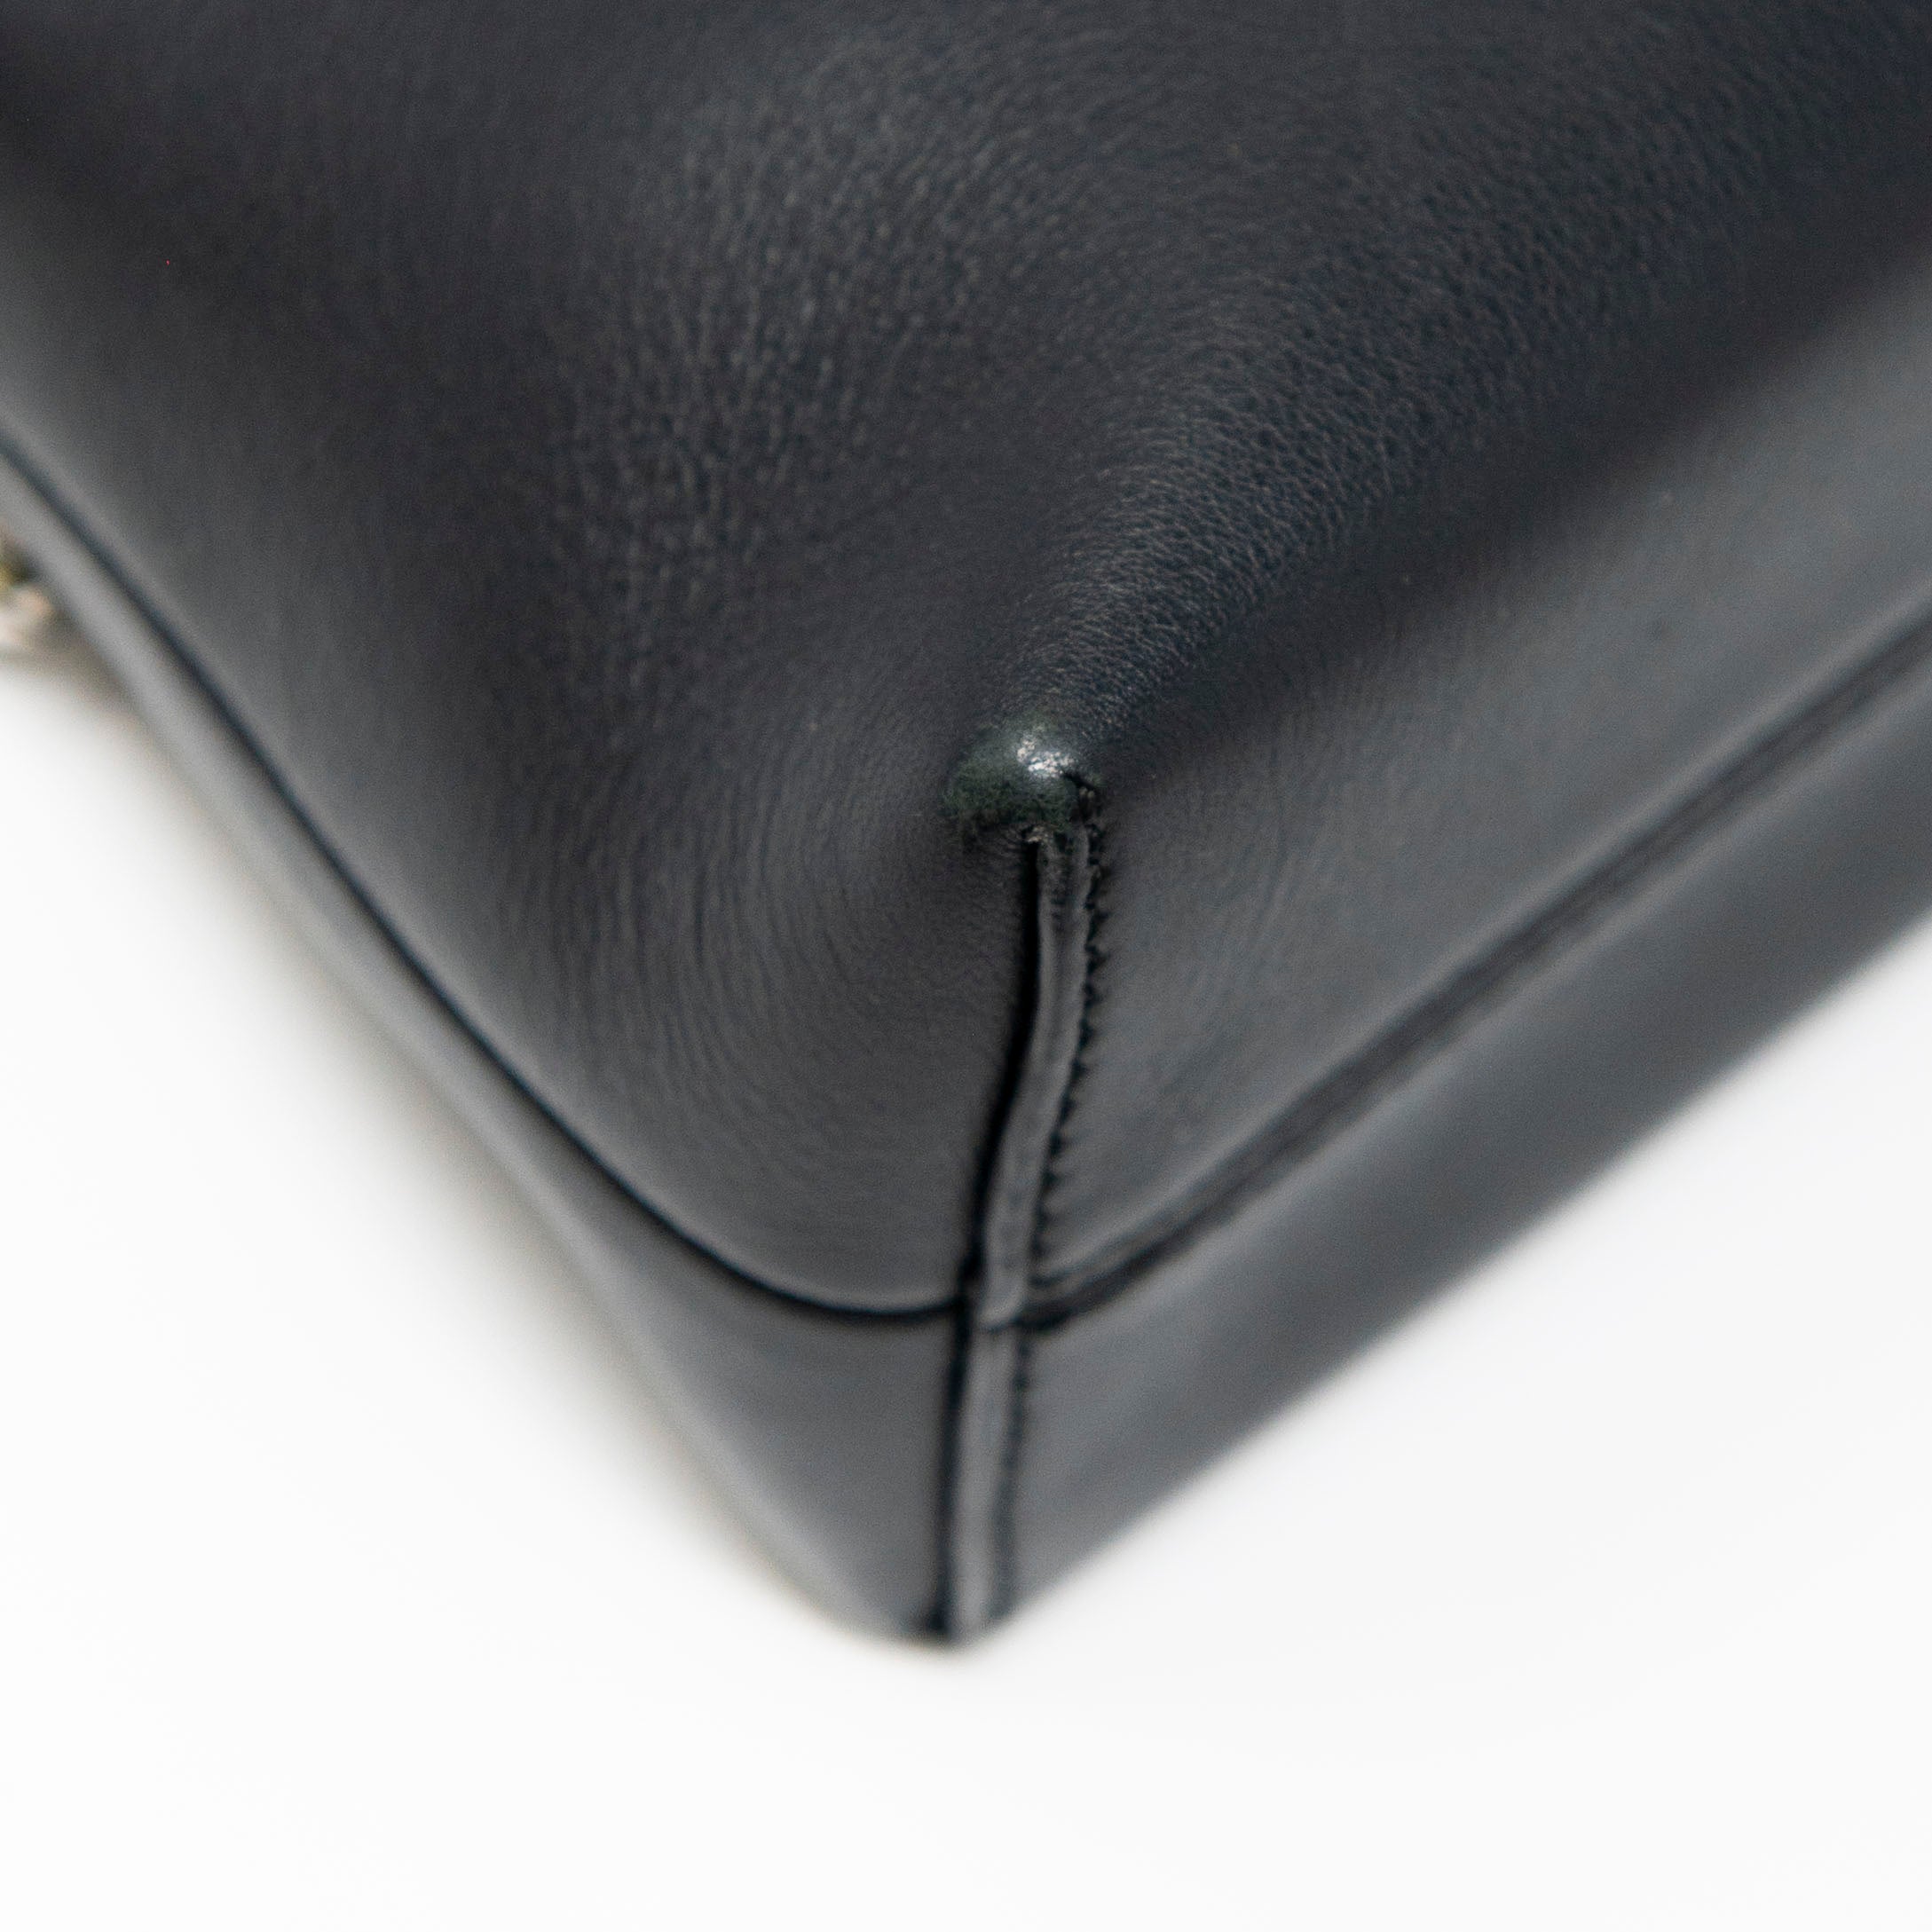 Fendi Black Mini By The Way Crystal-Croc-Tail Bag